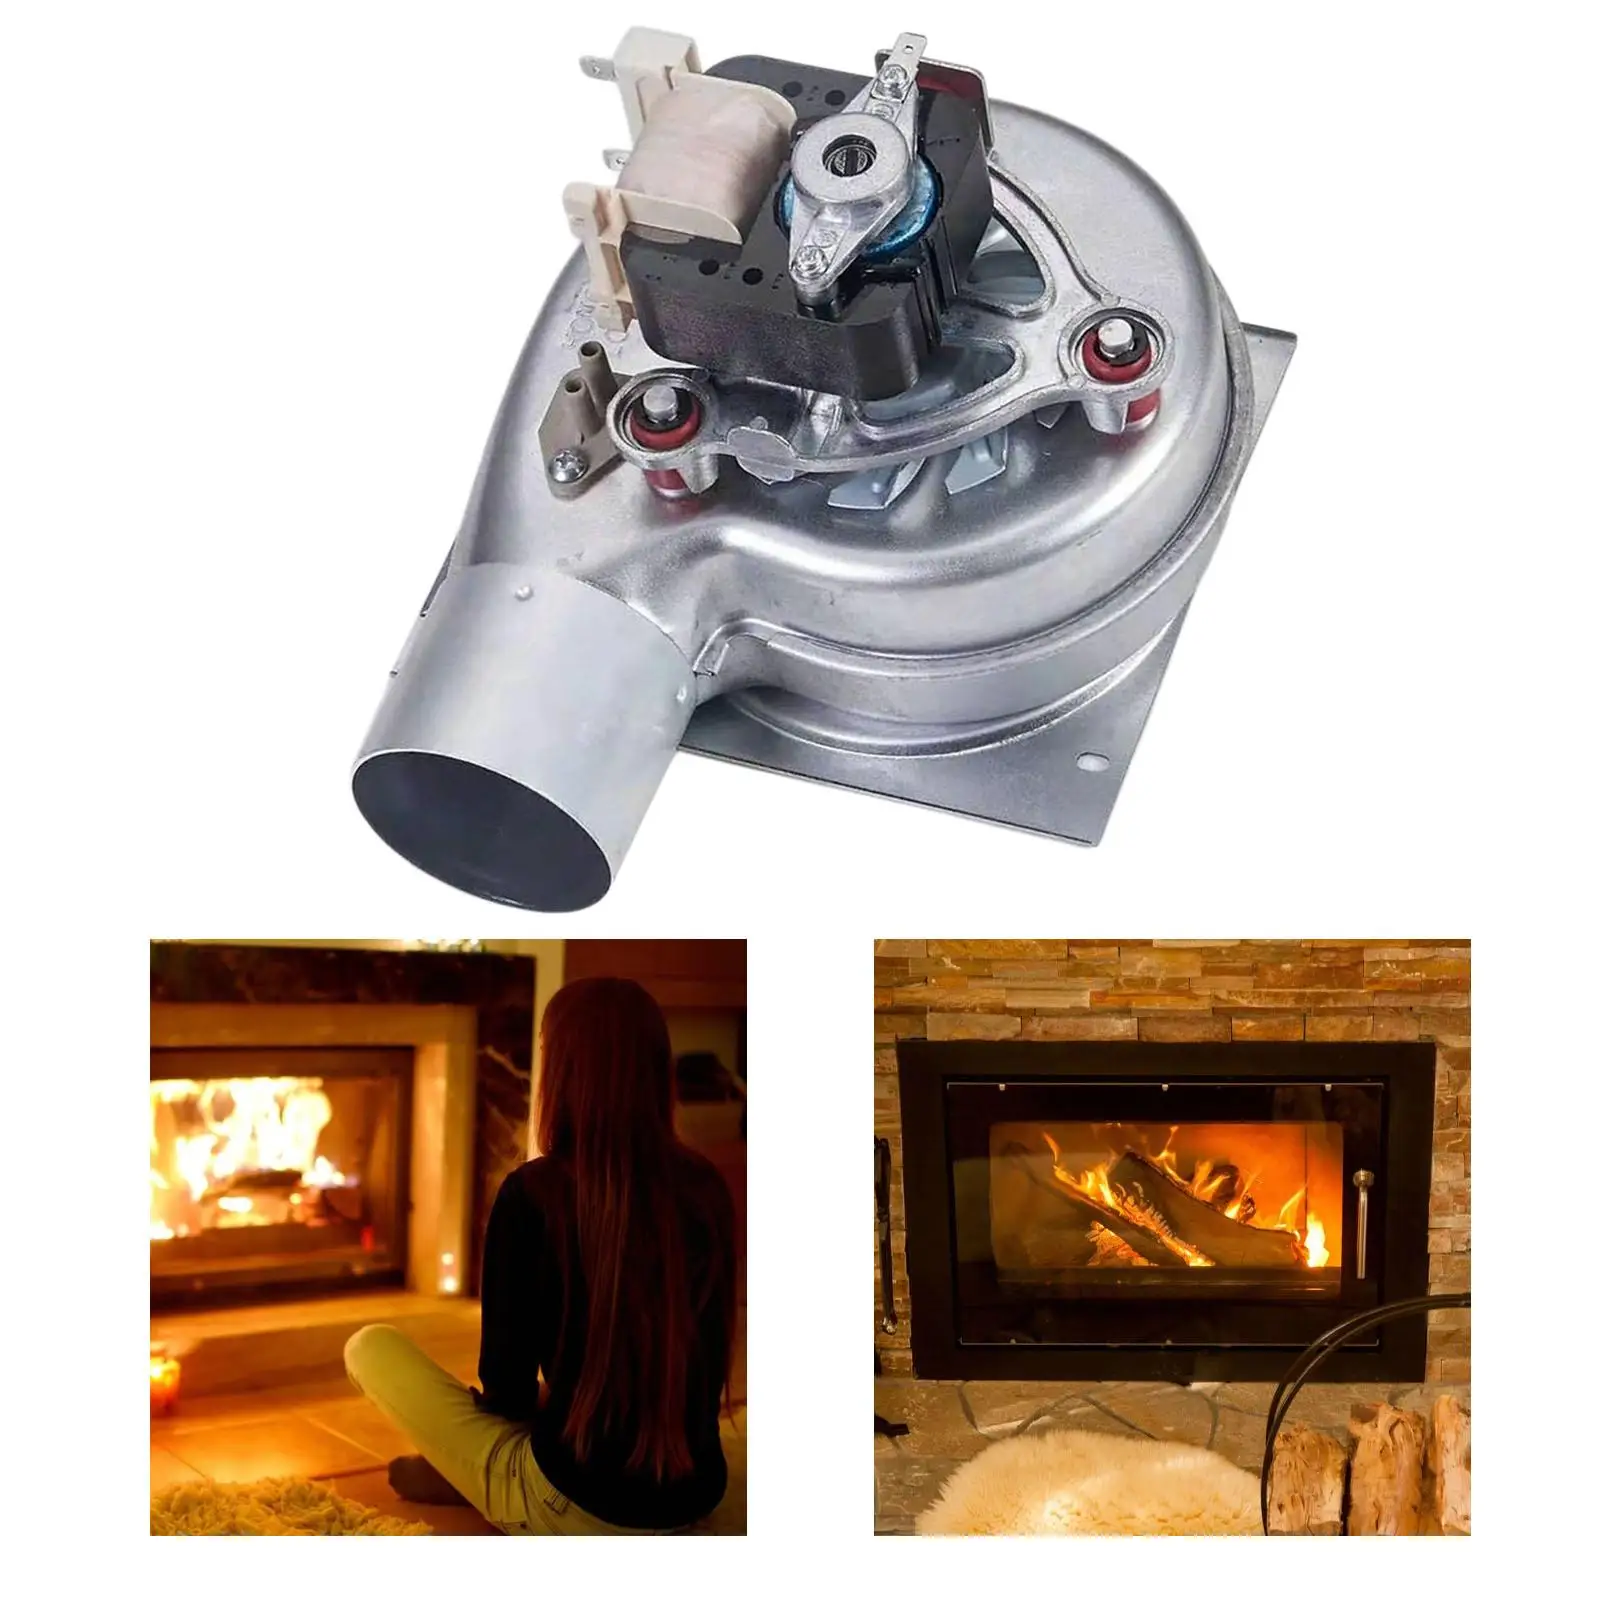 35W Furnace Centrifugal Blower Heat Dissipator Fan Iron Gear for Camping/Picnic/Outdoor Acativities